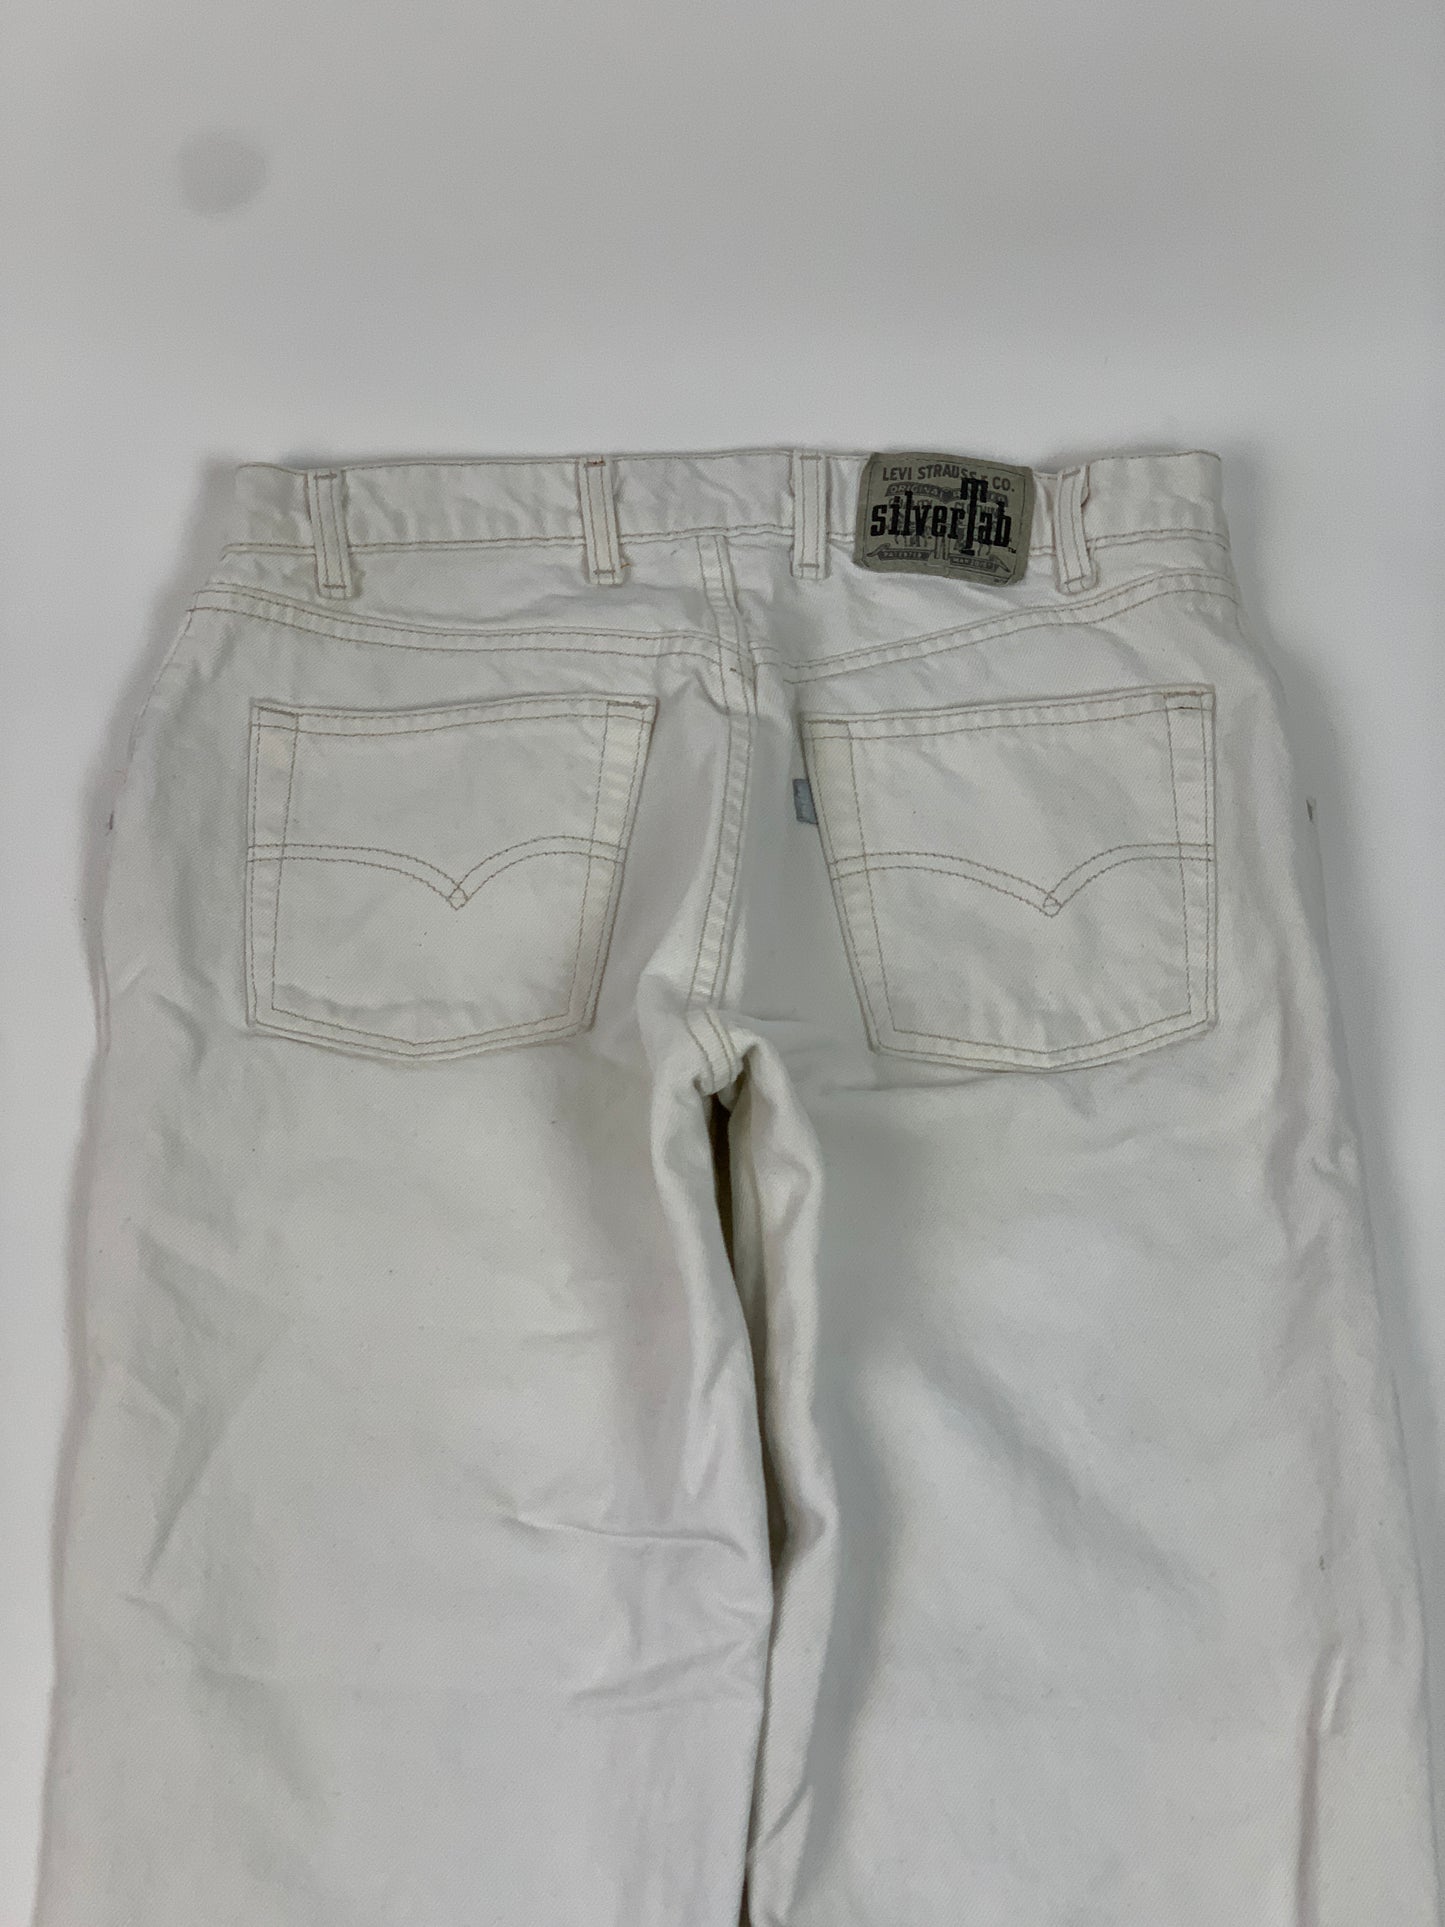 Levis SilverTab Vintage Jeans - 33 x 30